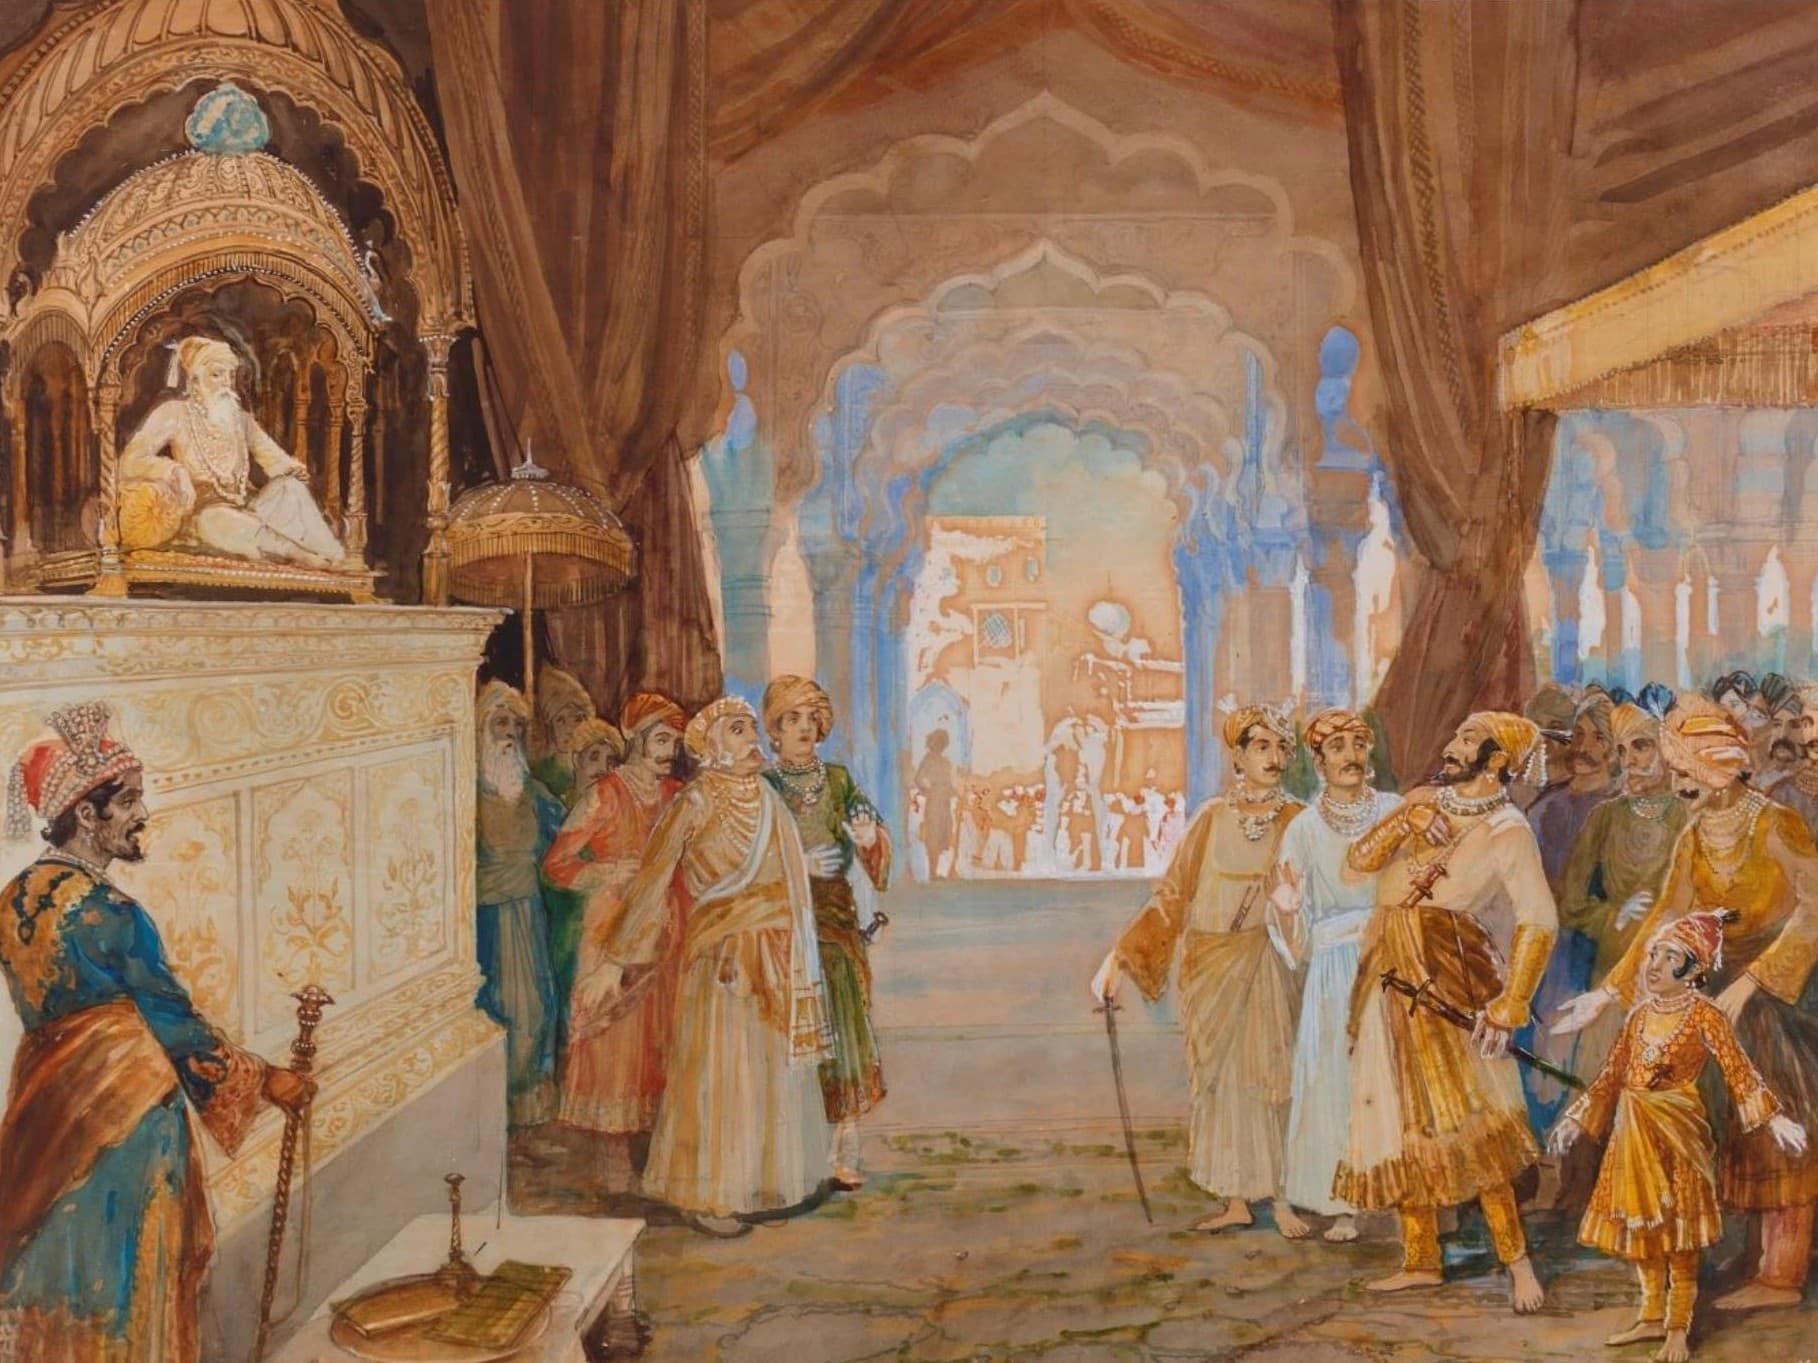 Painting depicting Shivaji Maharaj in the Court of Aurangzeb